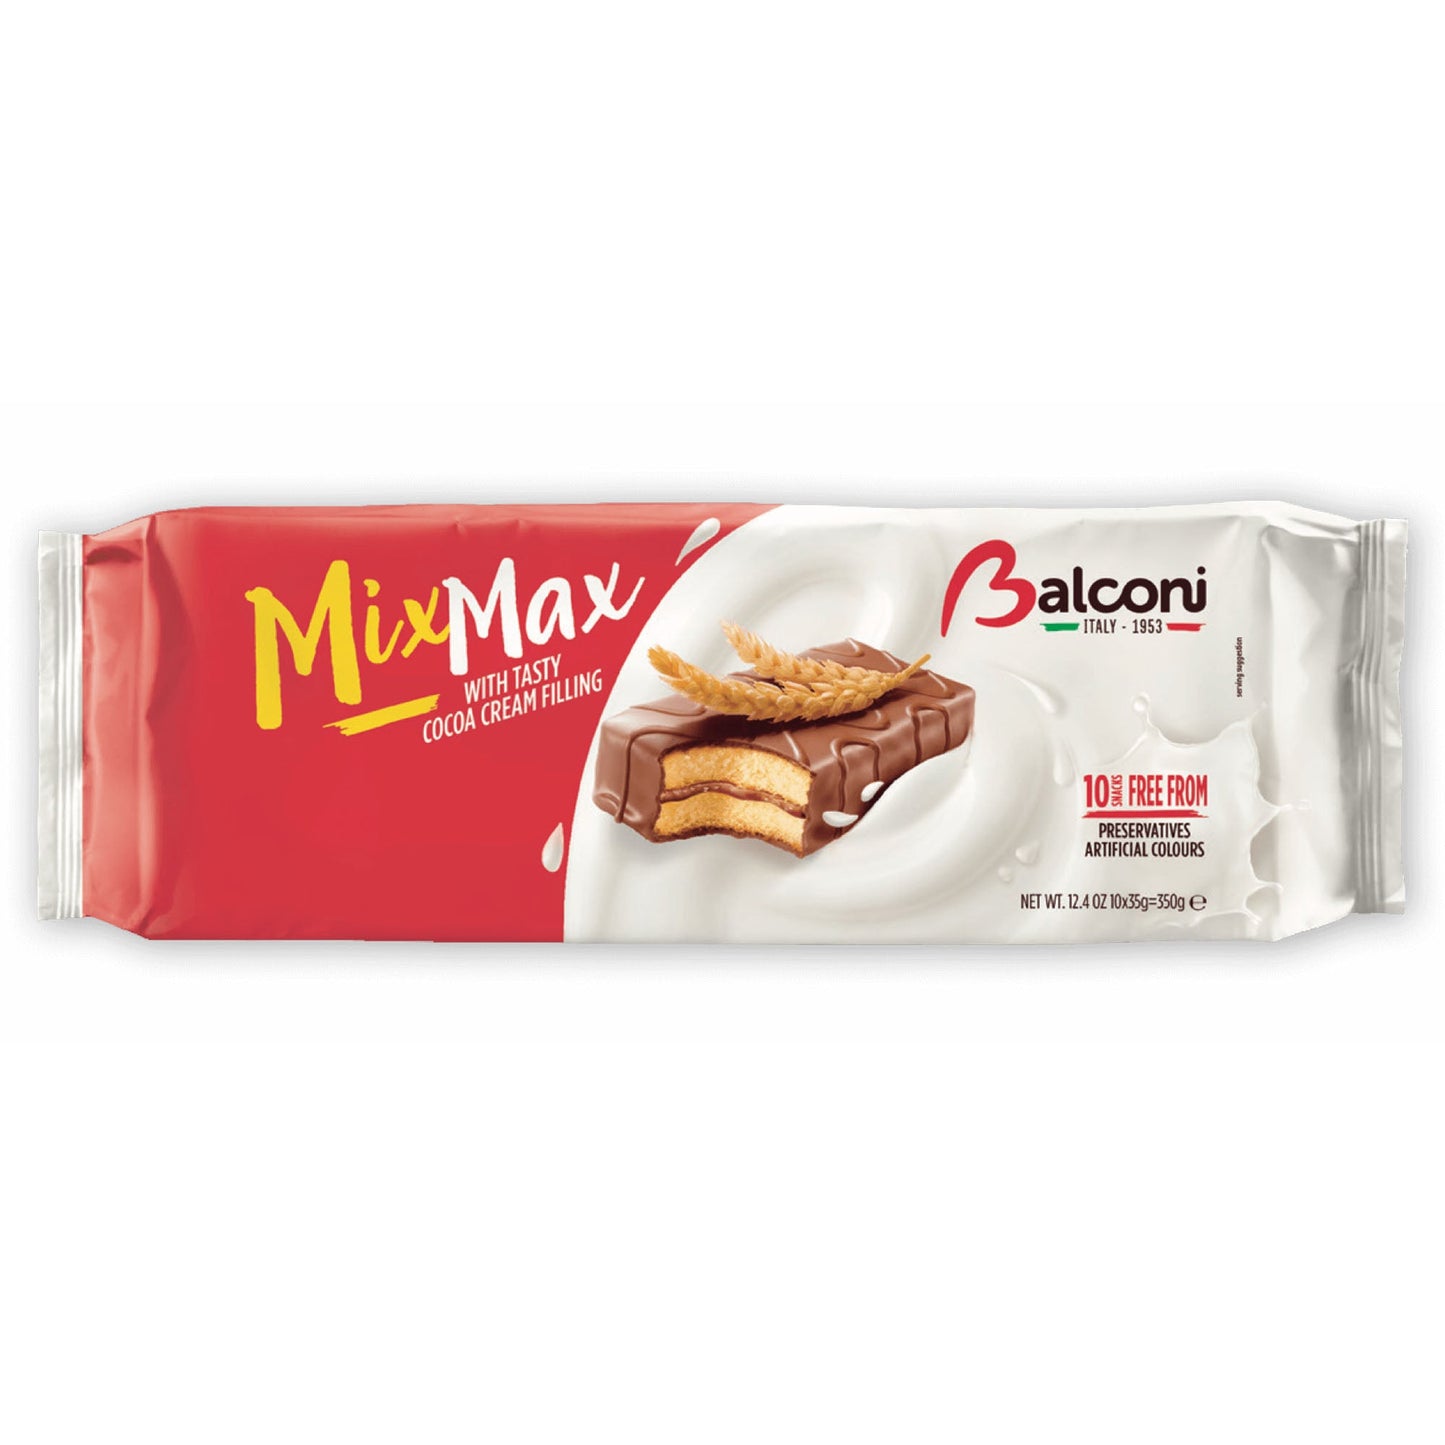 Balconi Mix Max Snacks 350G